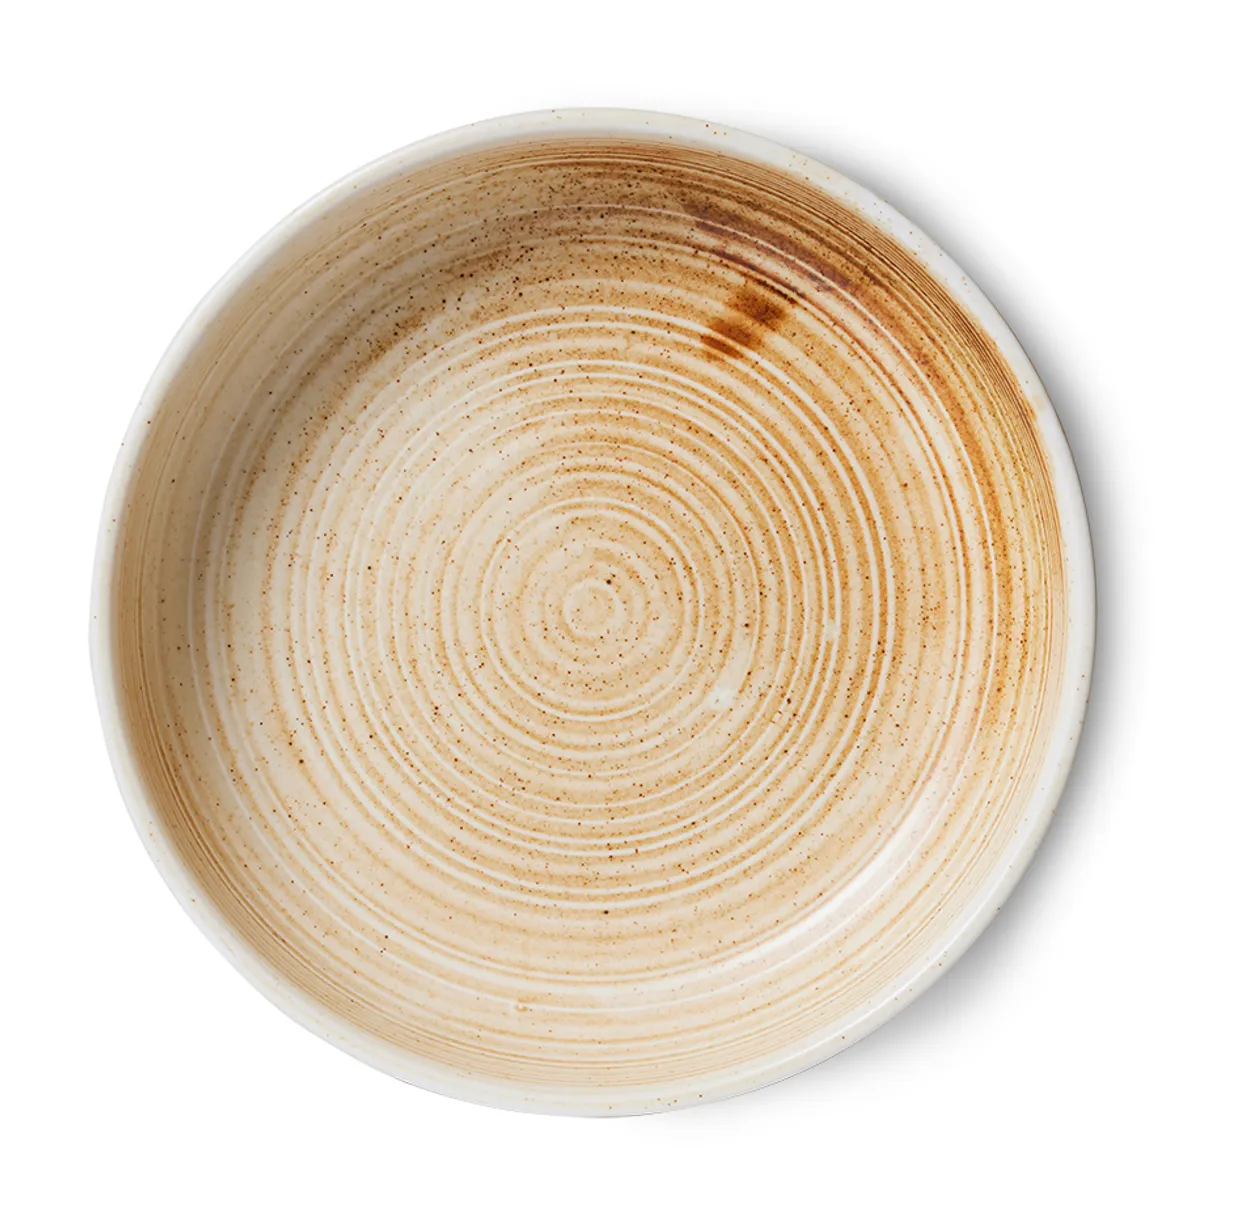 Chef ceramics: deep plate L, rustic cream/brown